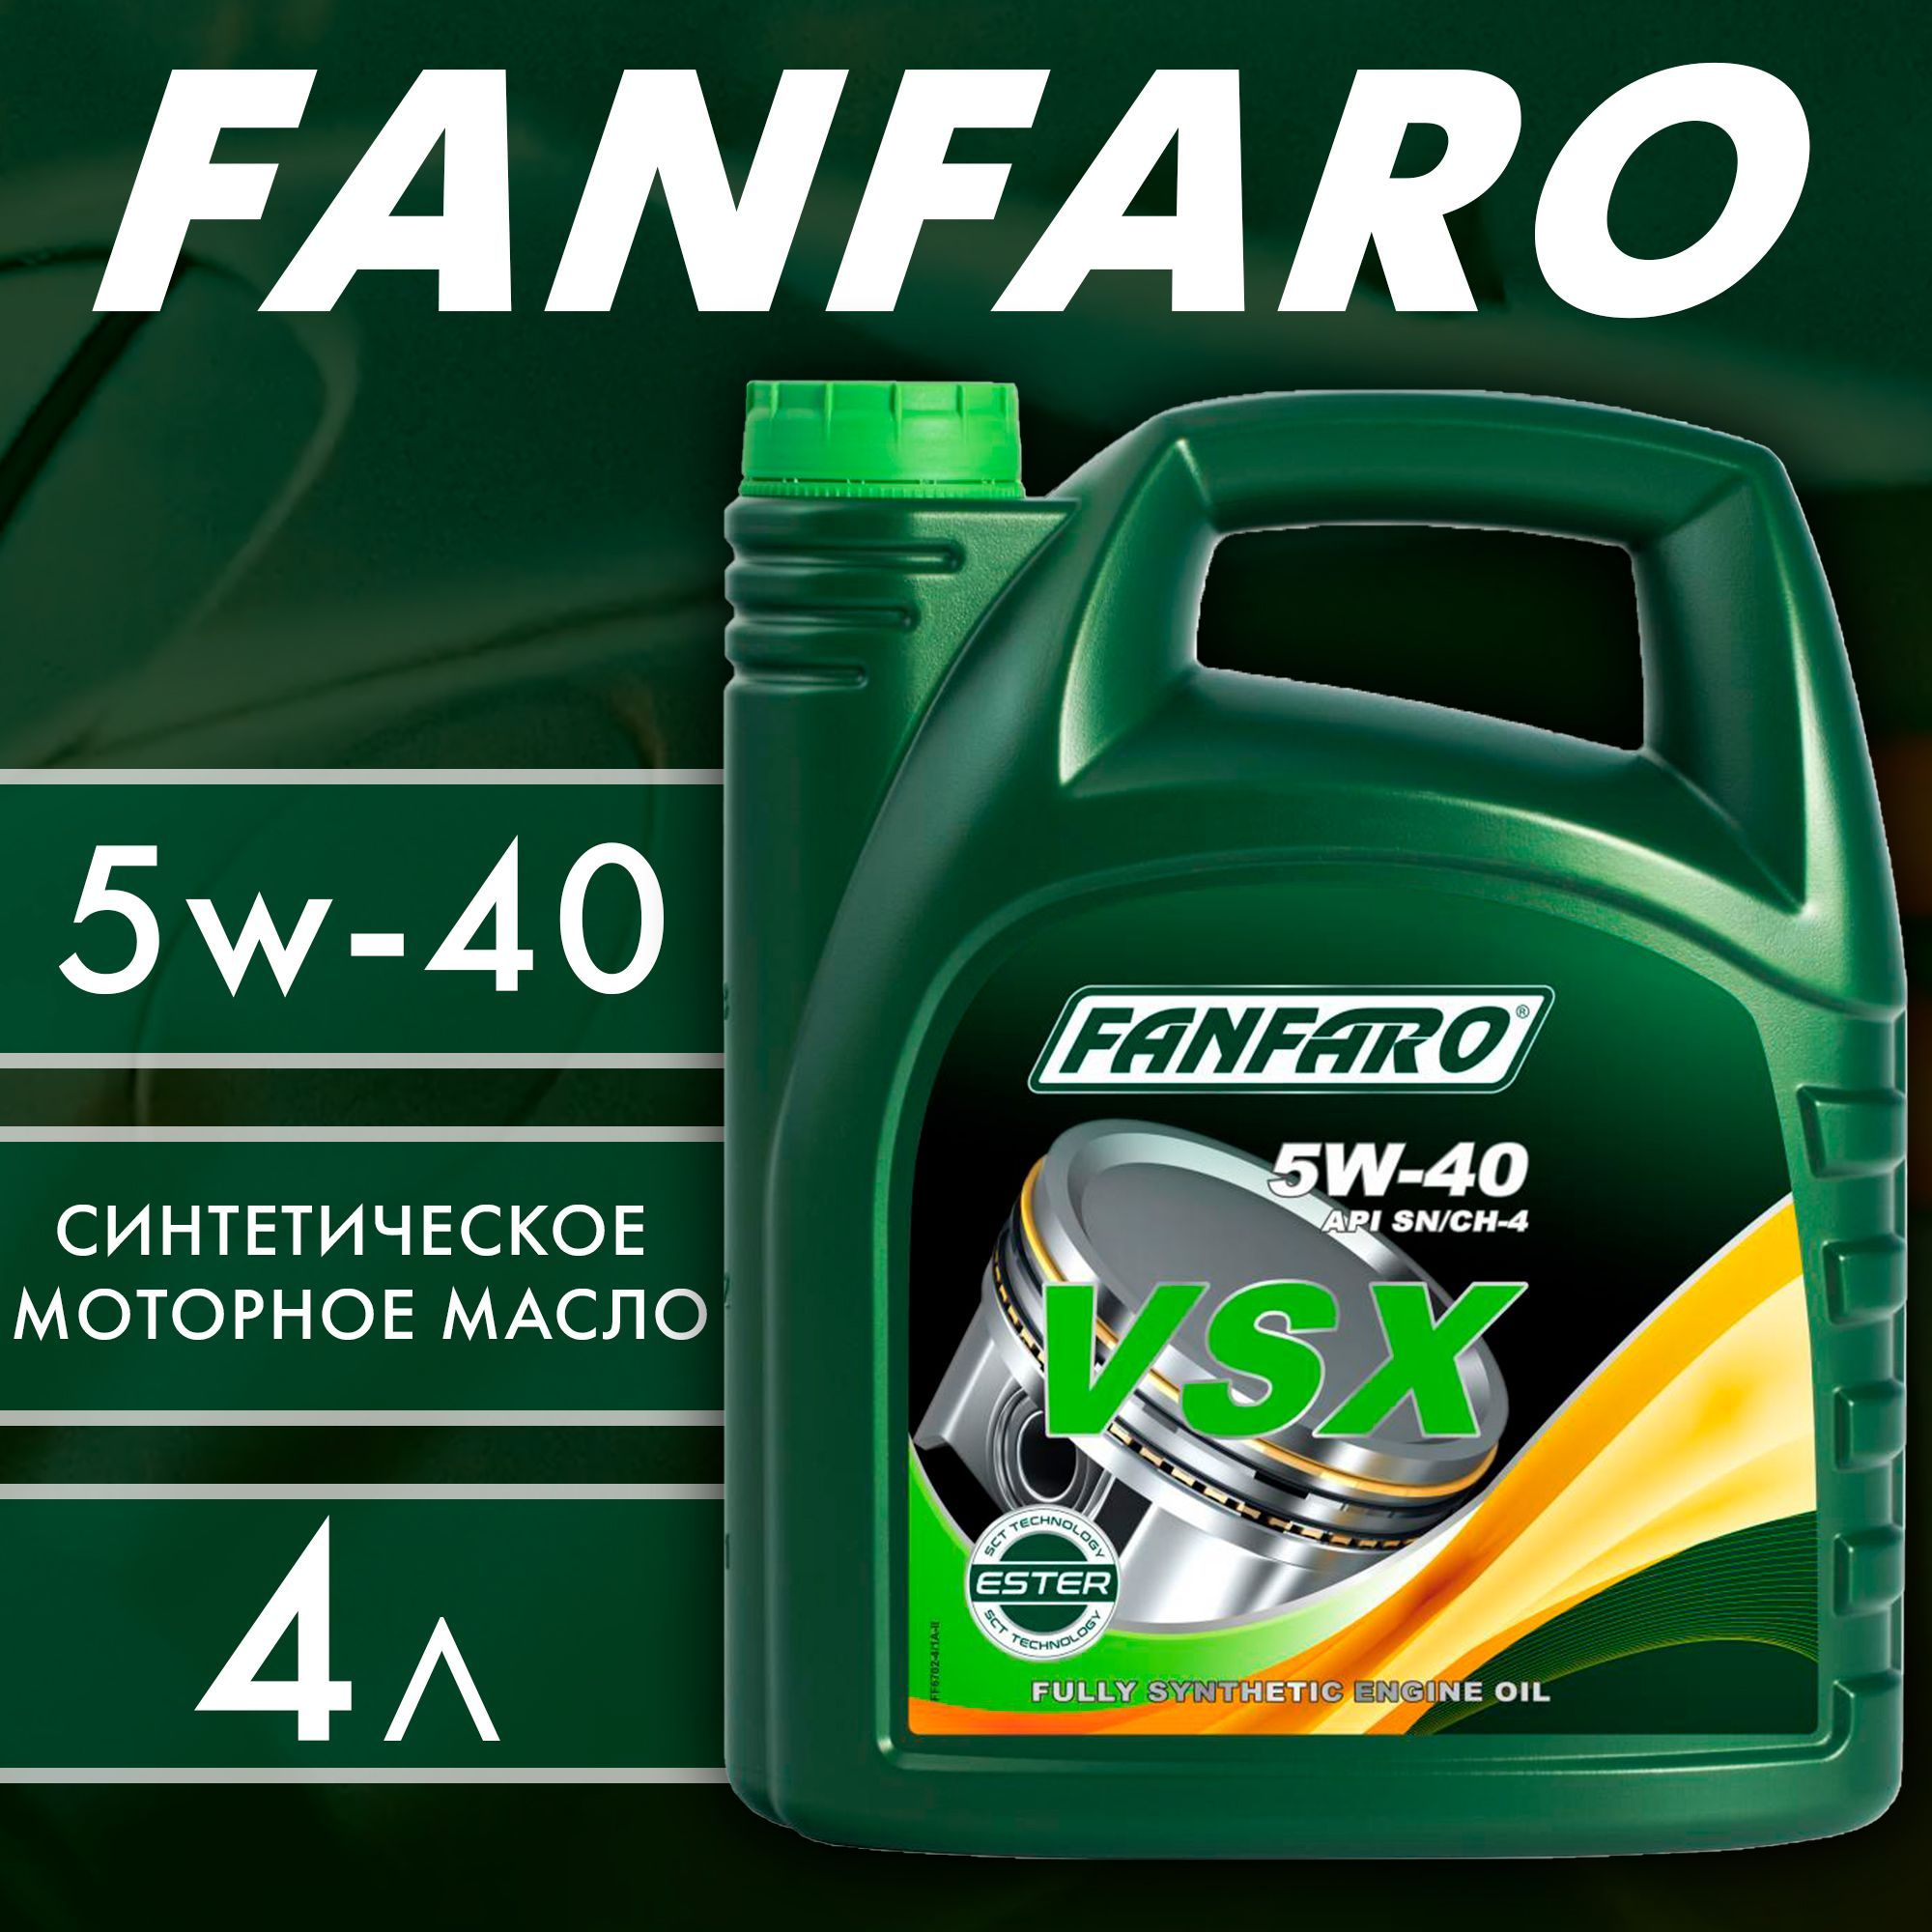 Моторное масло Fanfaro VSX 5w-40 4 л. Fanfaro 0888010705. Эликсир масло моторное 5w40 синтетика отзывы. Elixir масло моторное 5w40 синтетика отзывы.